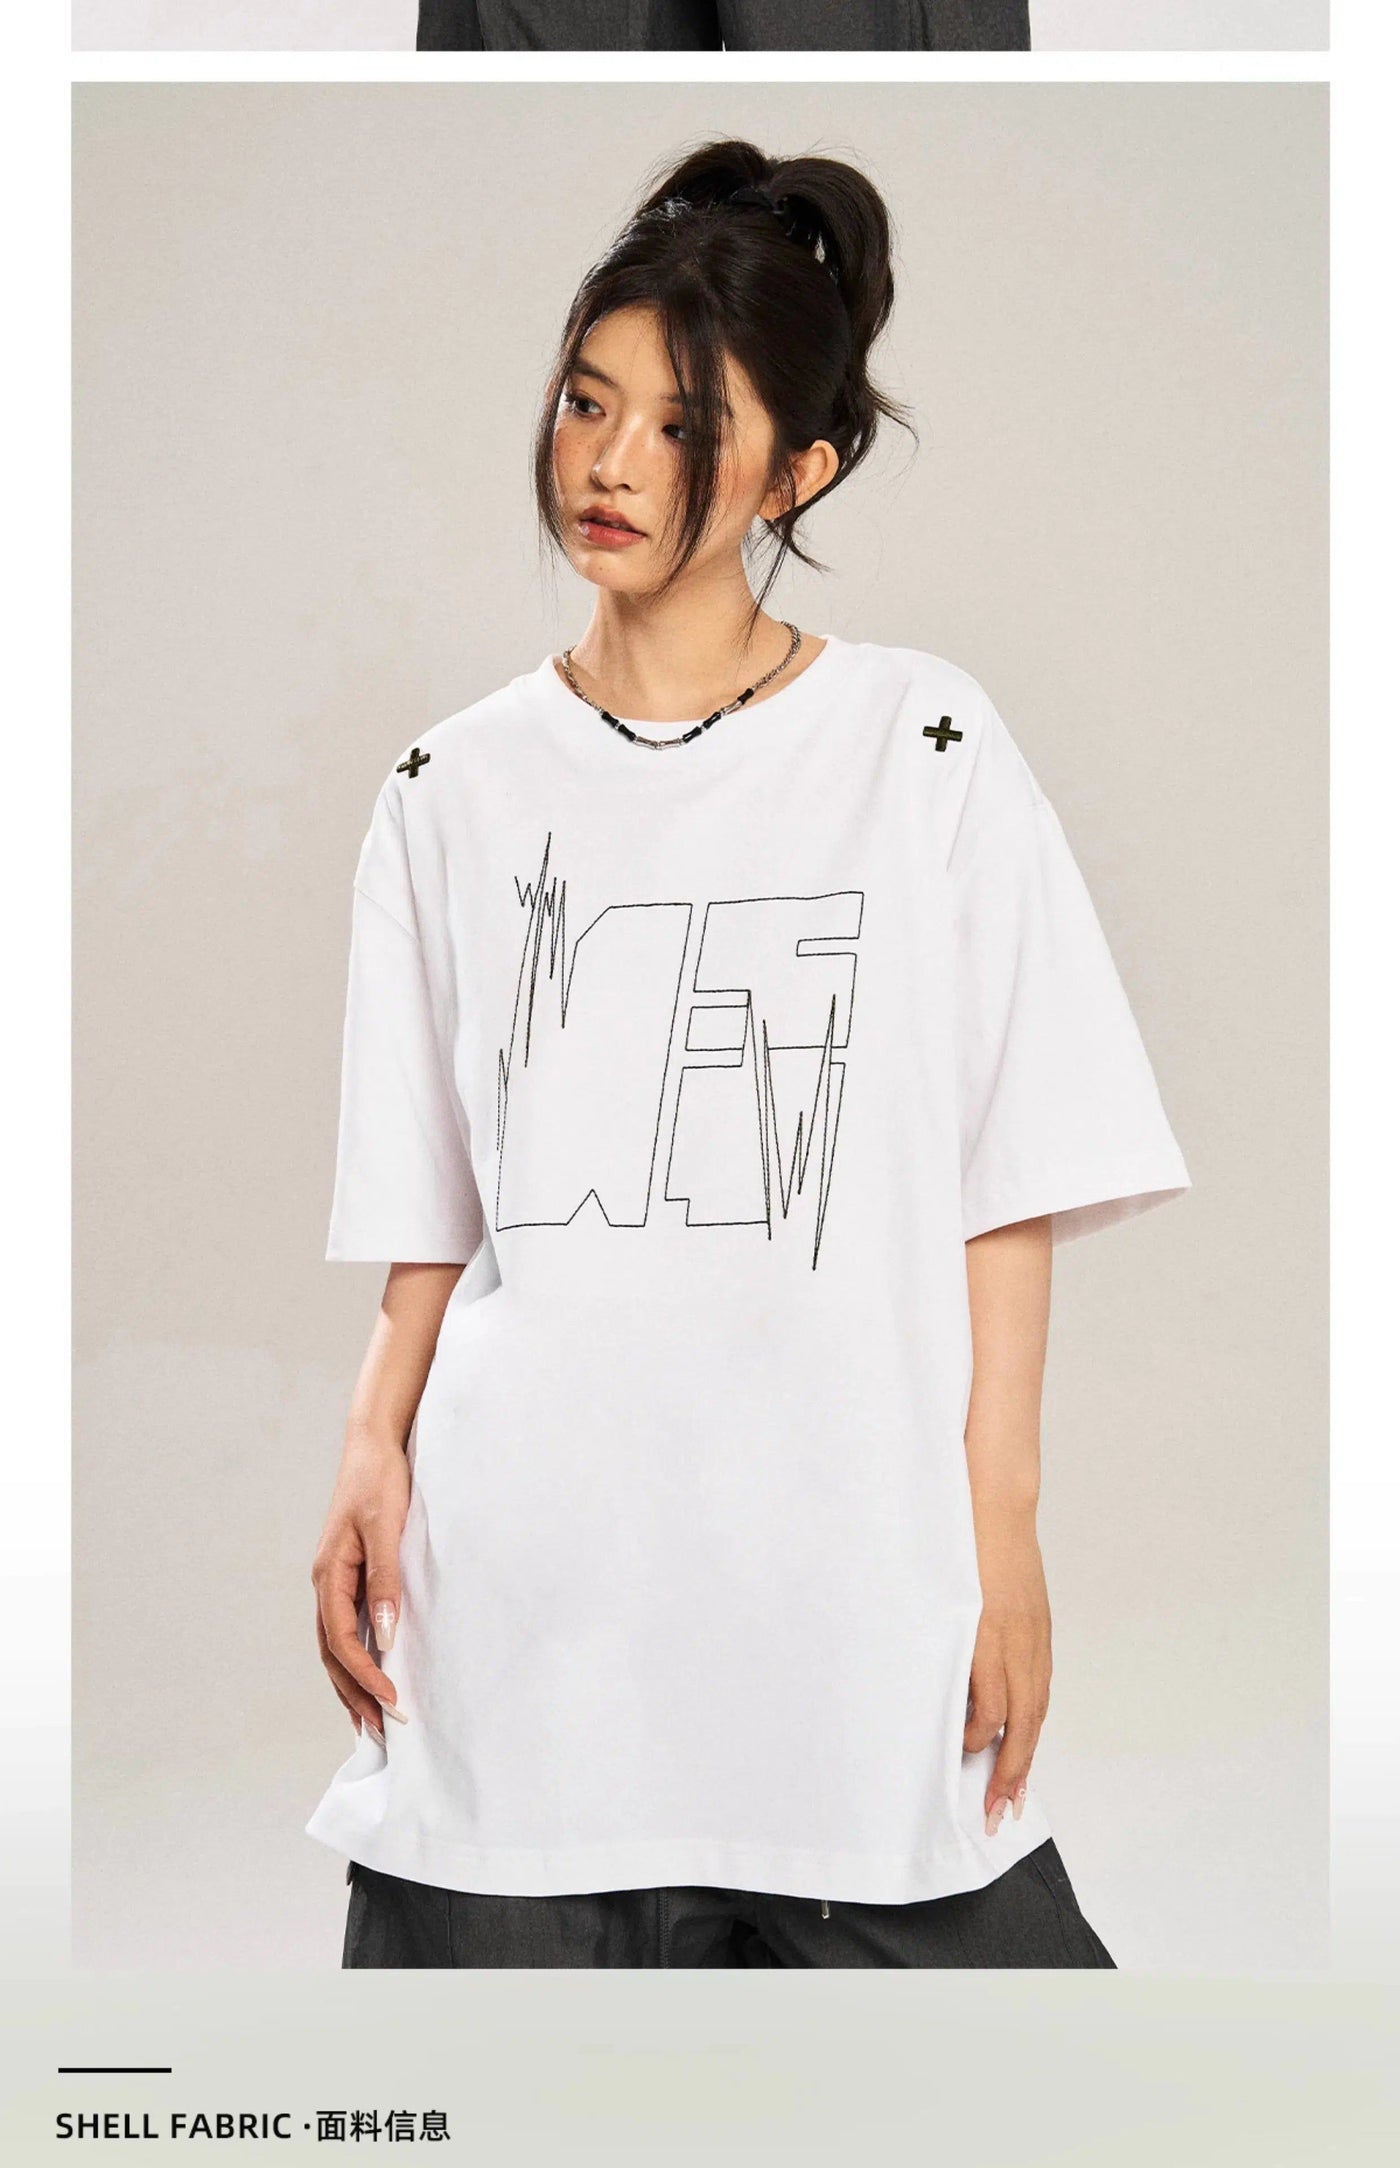 Thin Stitch Logo T-Shirt Korean Street Fashion T-Shirt By New Start Shop Online at OH Vault